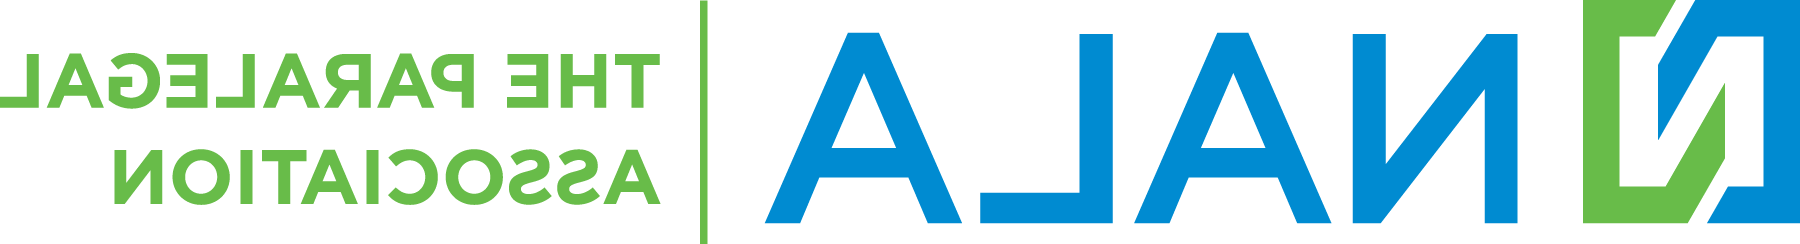 Paralegal Association Logo